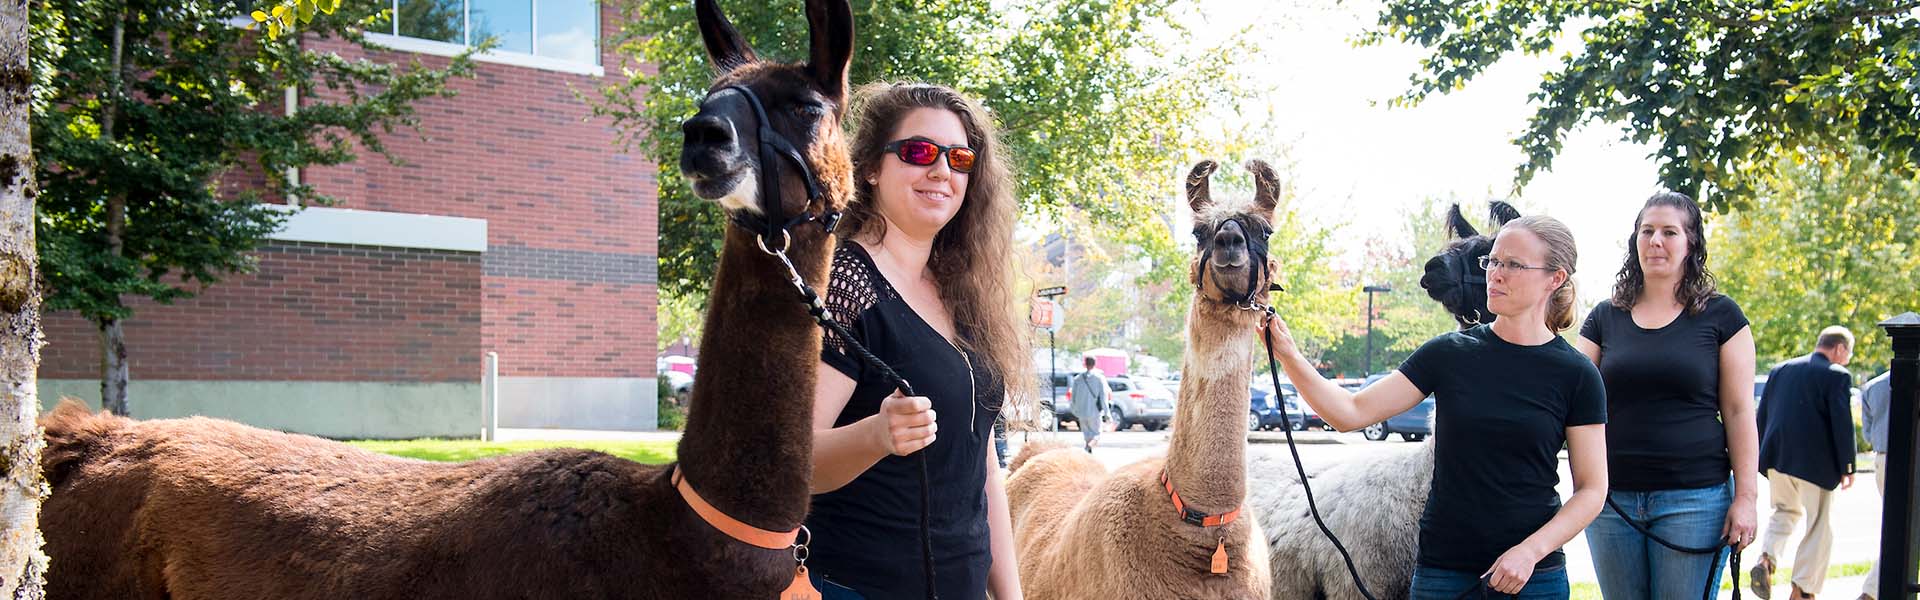 Women taking care of llamas outdoors